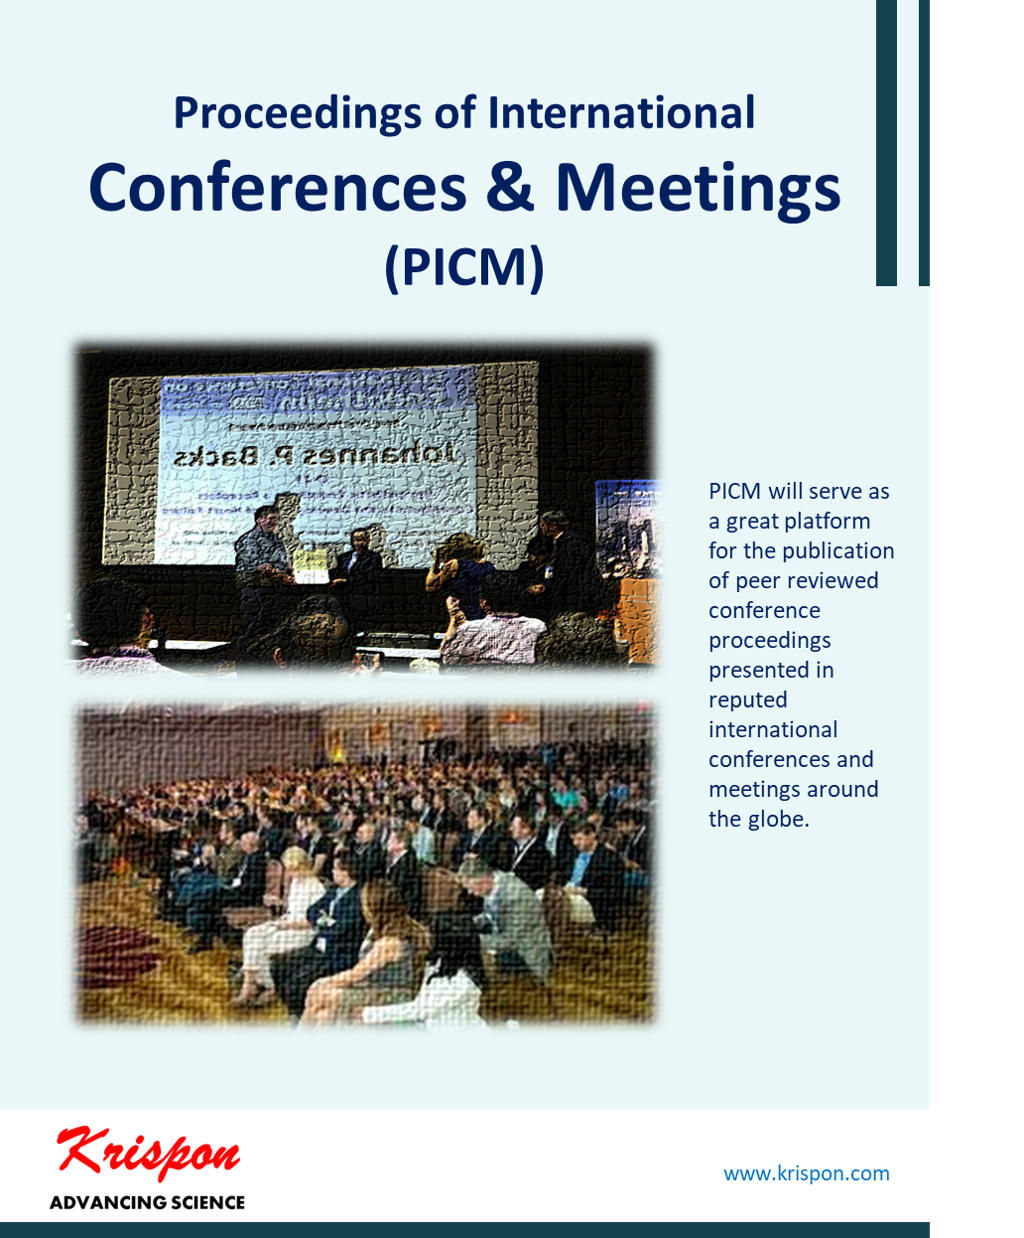 Proceedings of International Conferences & Meetings - PICM